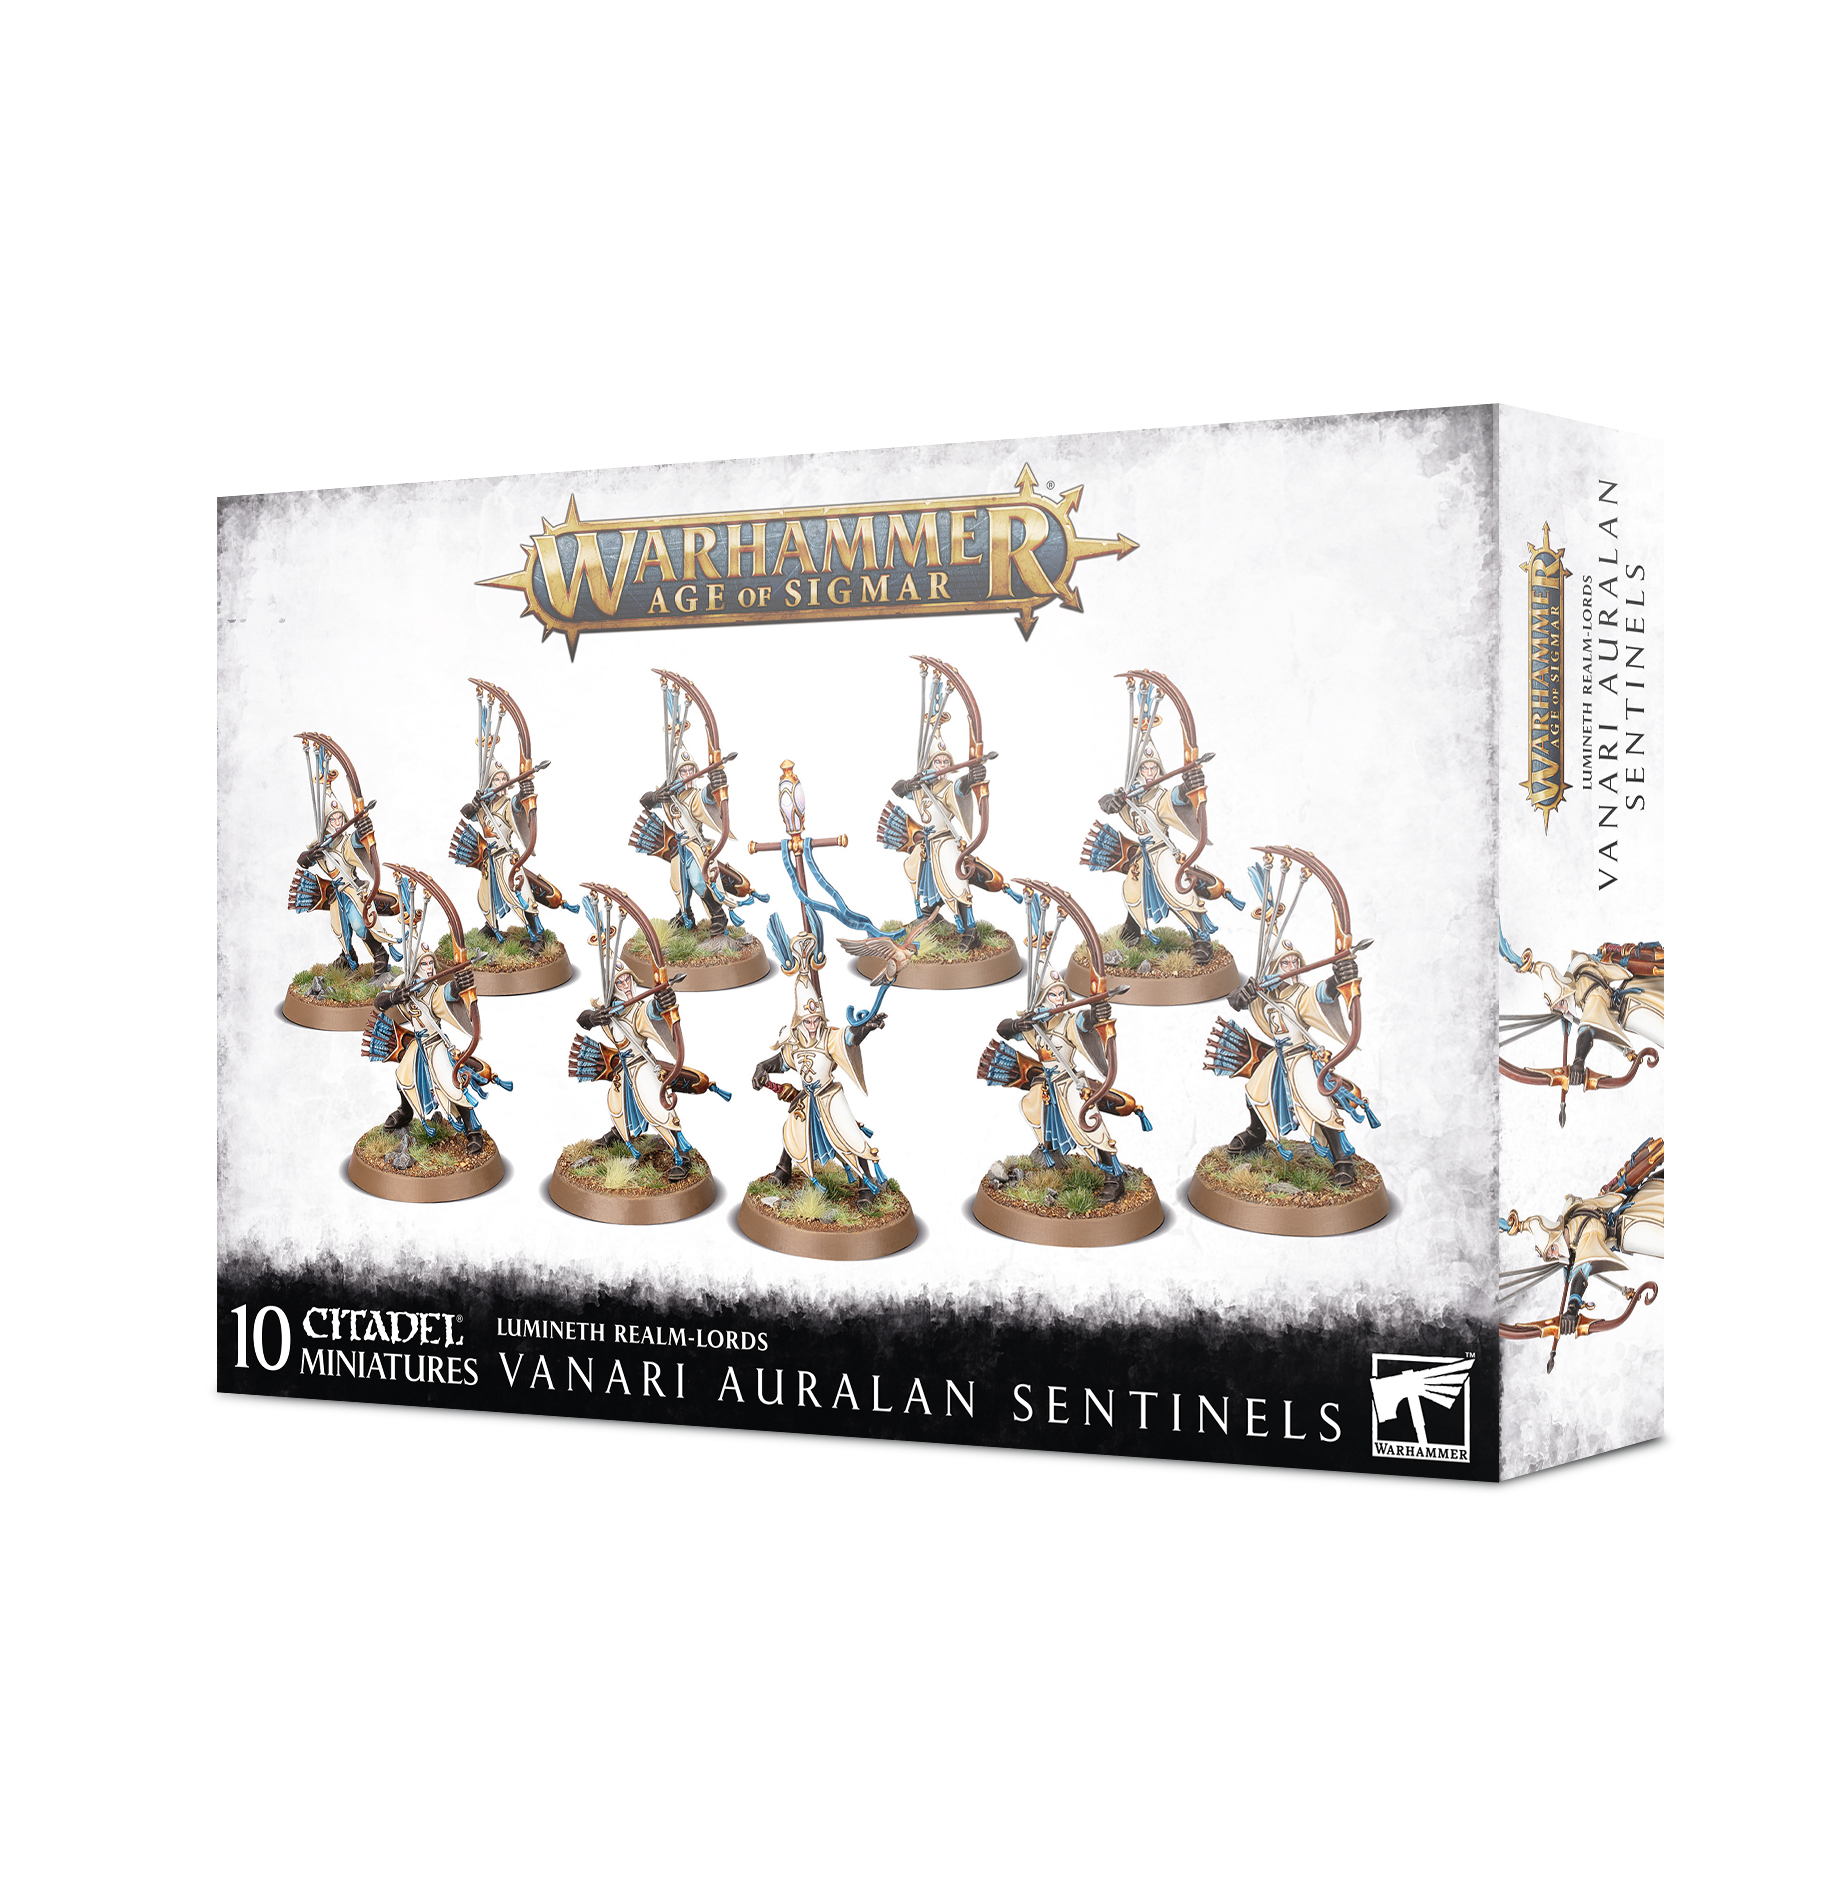 Vanari Auralan Sentinels - 87-58 - Lumineth Realm-Lords - Warhammer Age of Sigmar